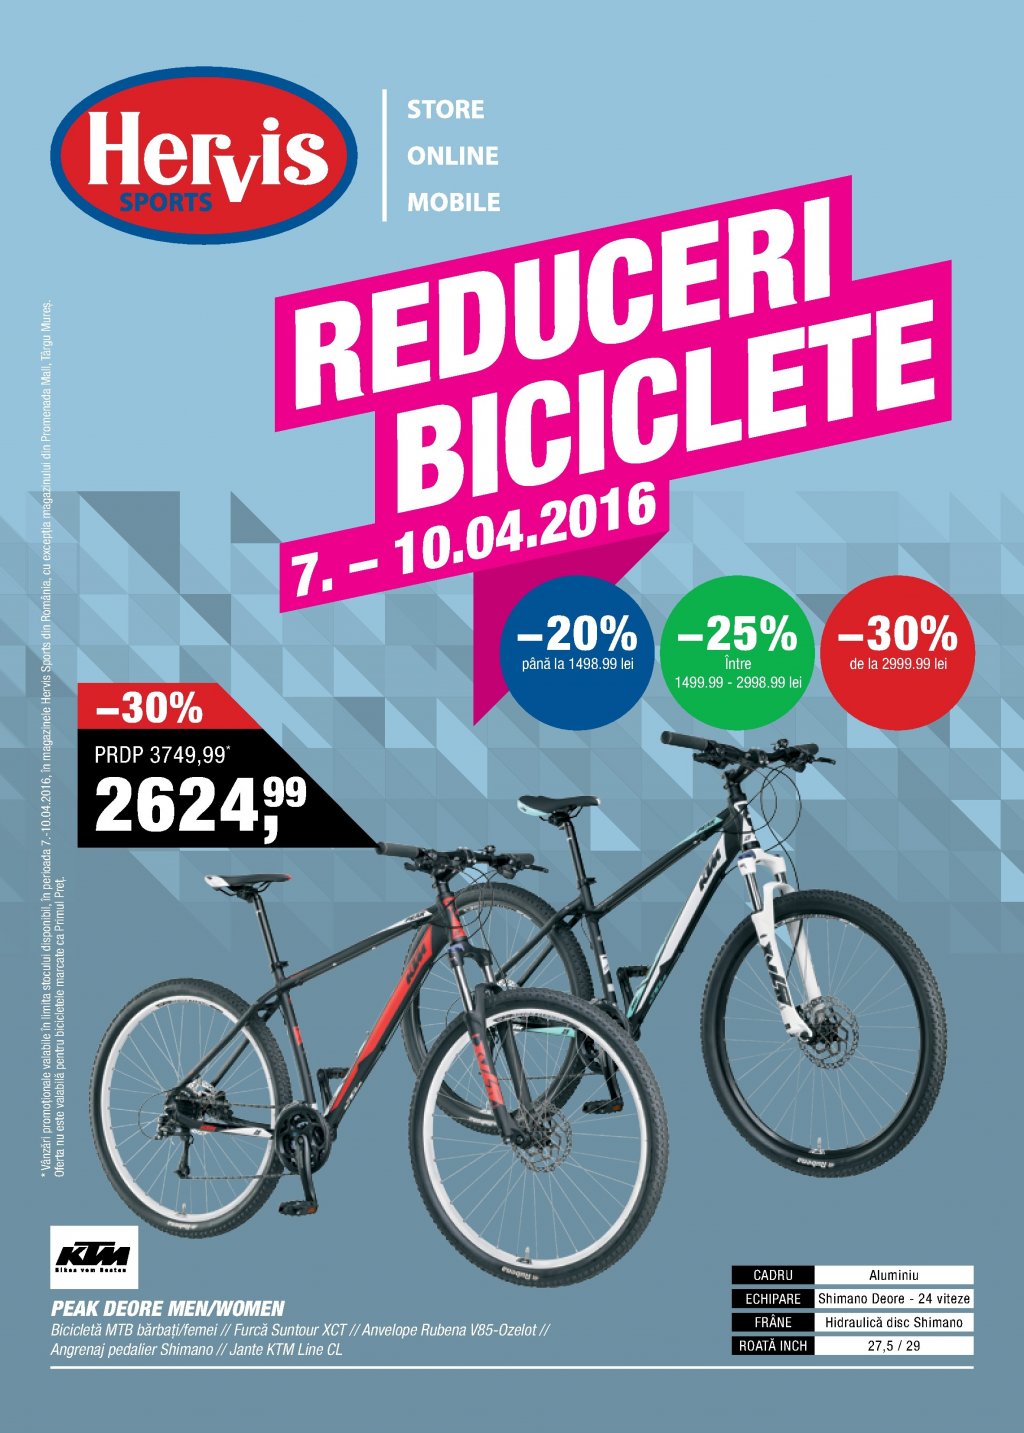 tonight Butcher Ward Catalog Hervis Sports 7 - 10 aprilie 2016 'Reduceri biciclete'.